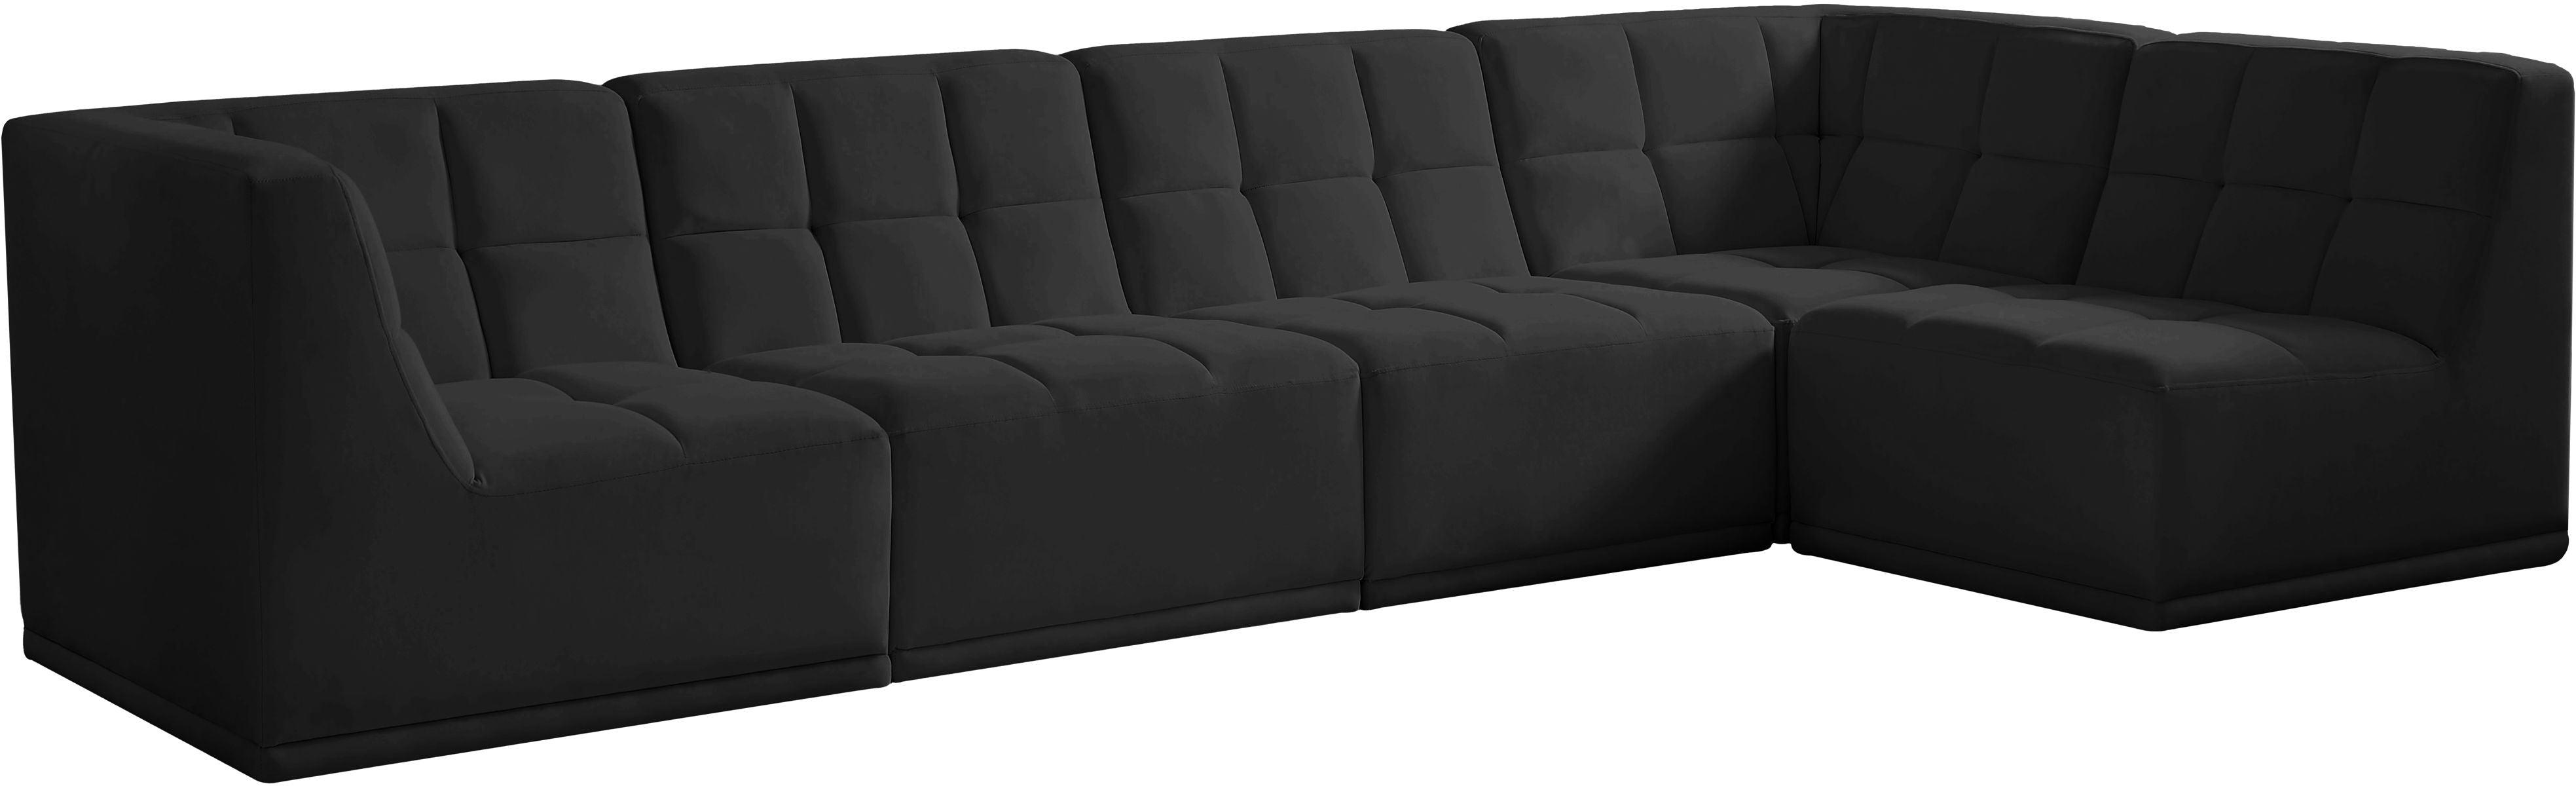 Meridian Furniture - Relax - Modular Sectional 5 Piece - Black - Fabric - 5th Avenue Furniture